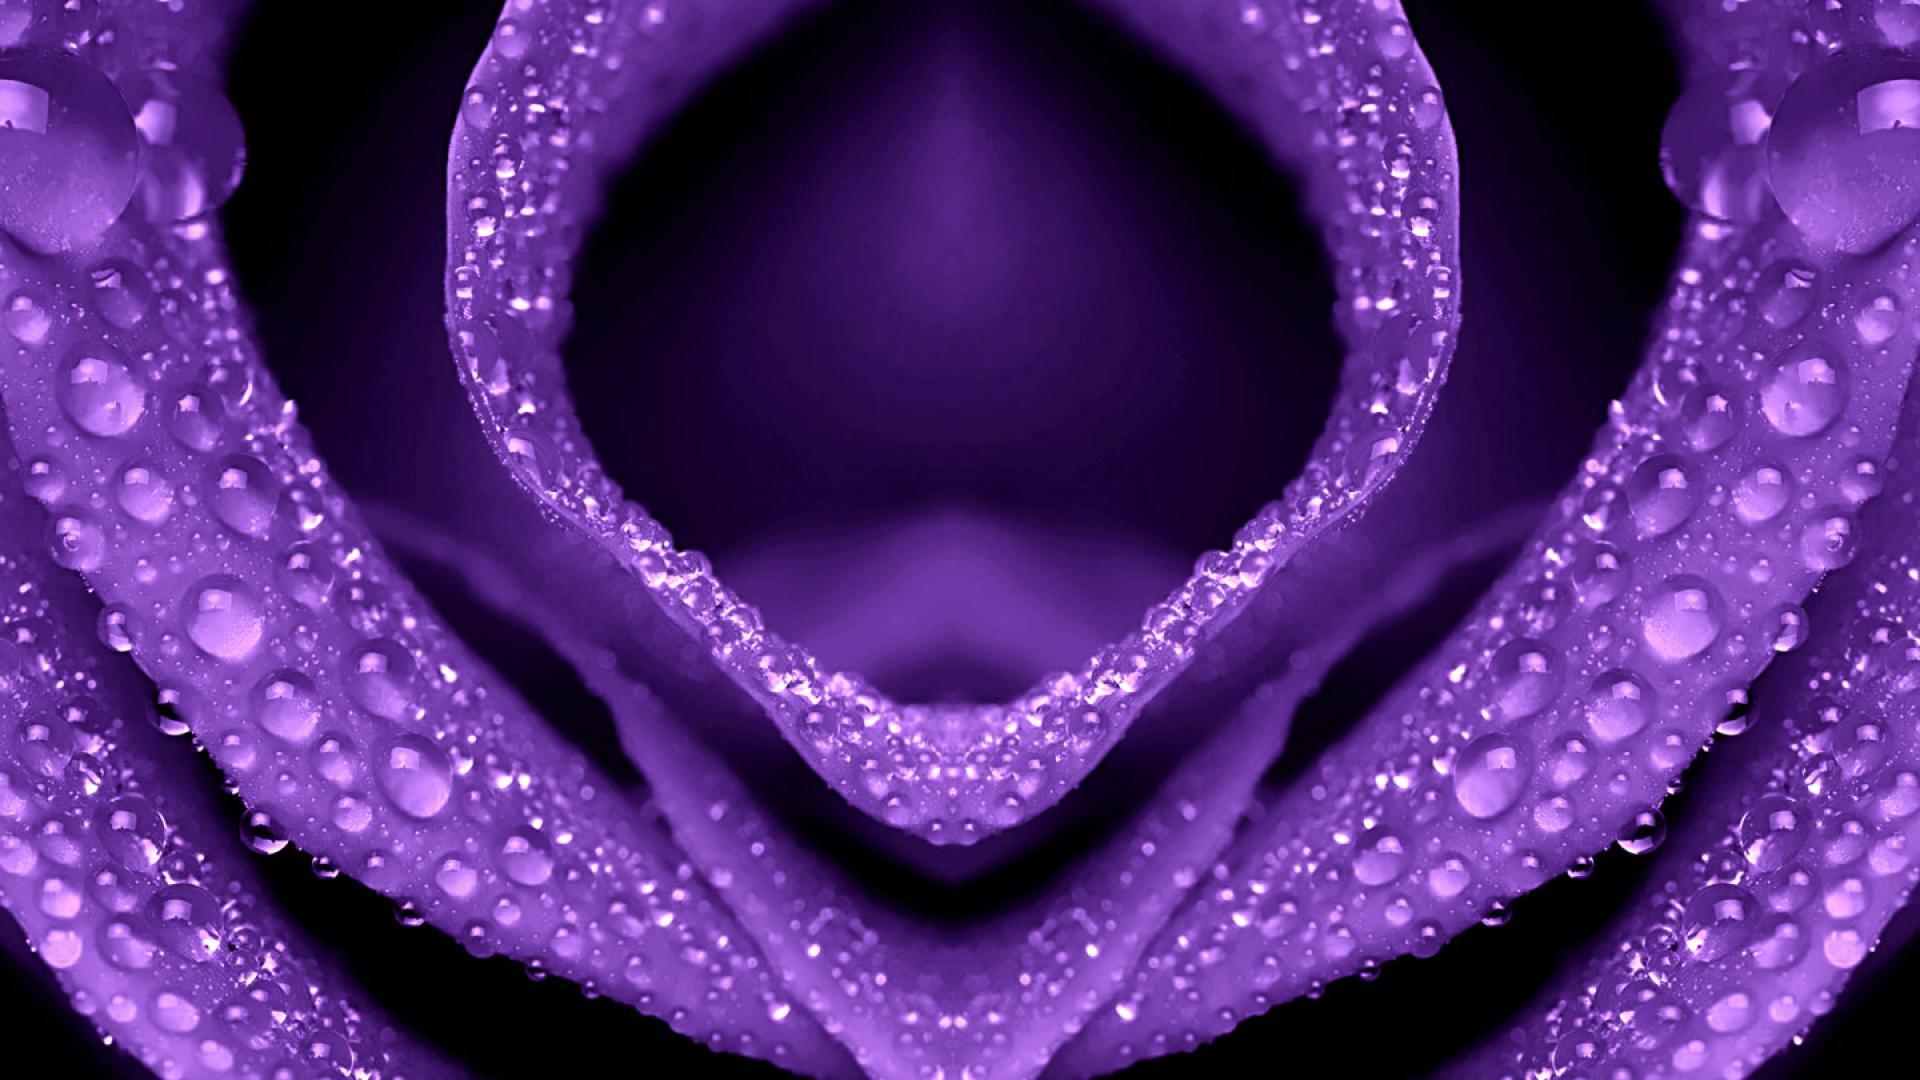 Flowers Purple 1080p Flower wallpaper Desktop, Phone, Tablet